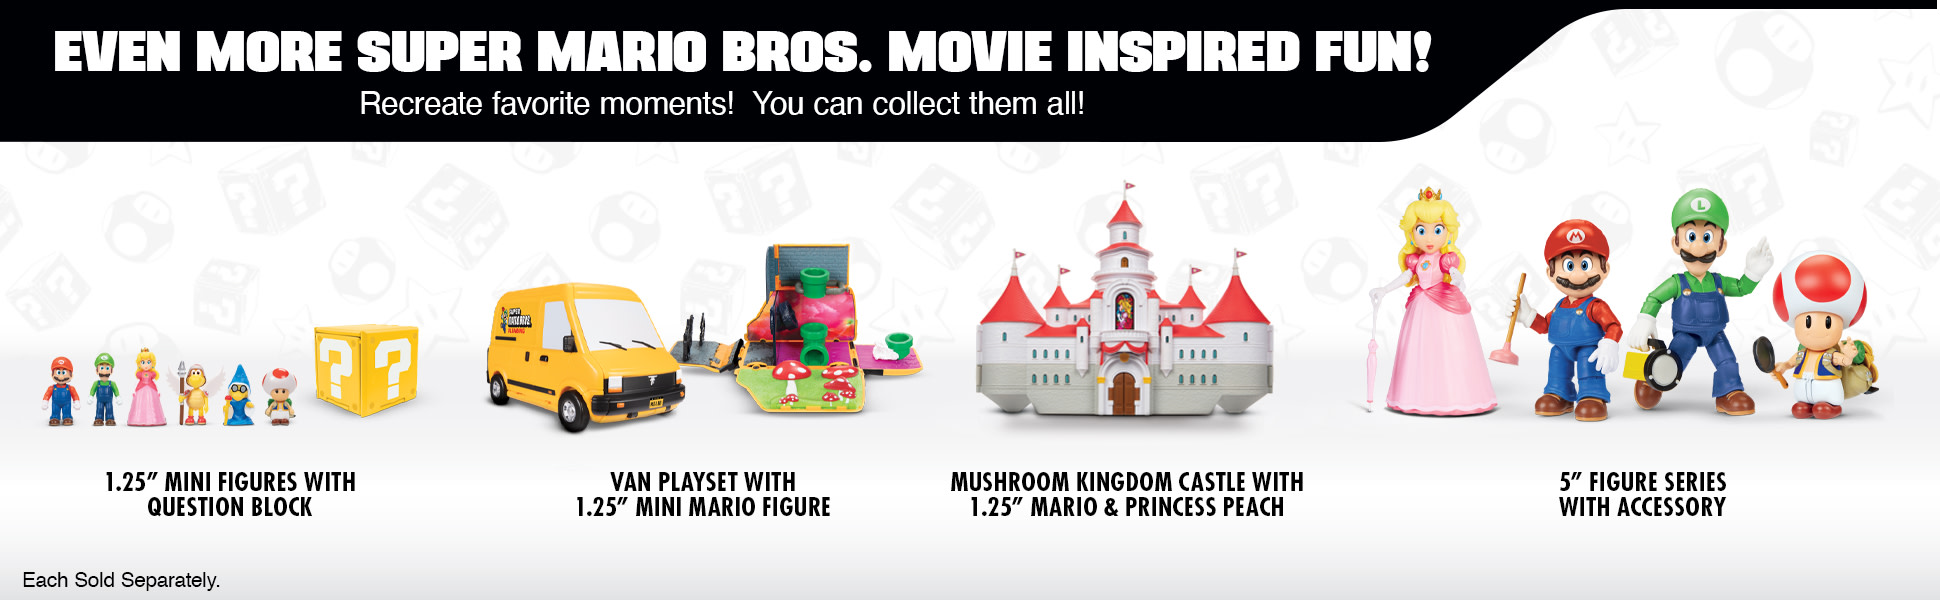 The Super Mario Bros. Movie - Figurine de 7po de Bowser cracheur du feu -  Site officiel Nintendo